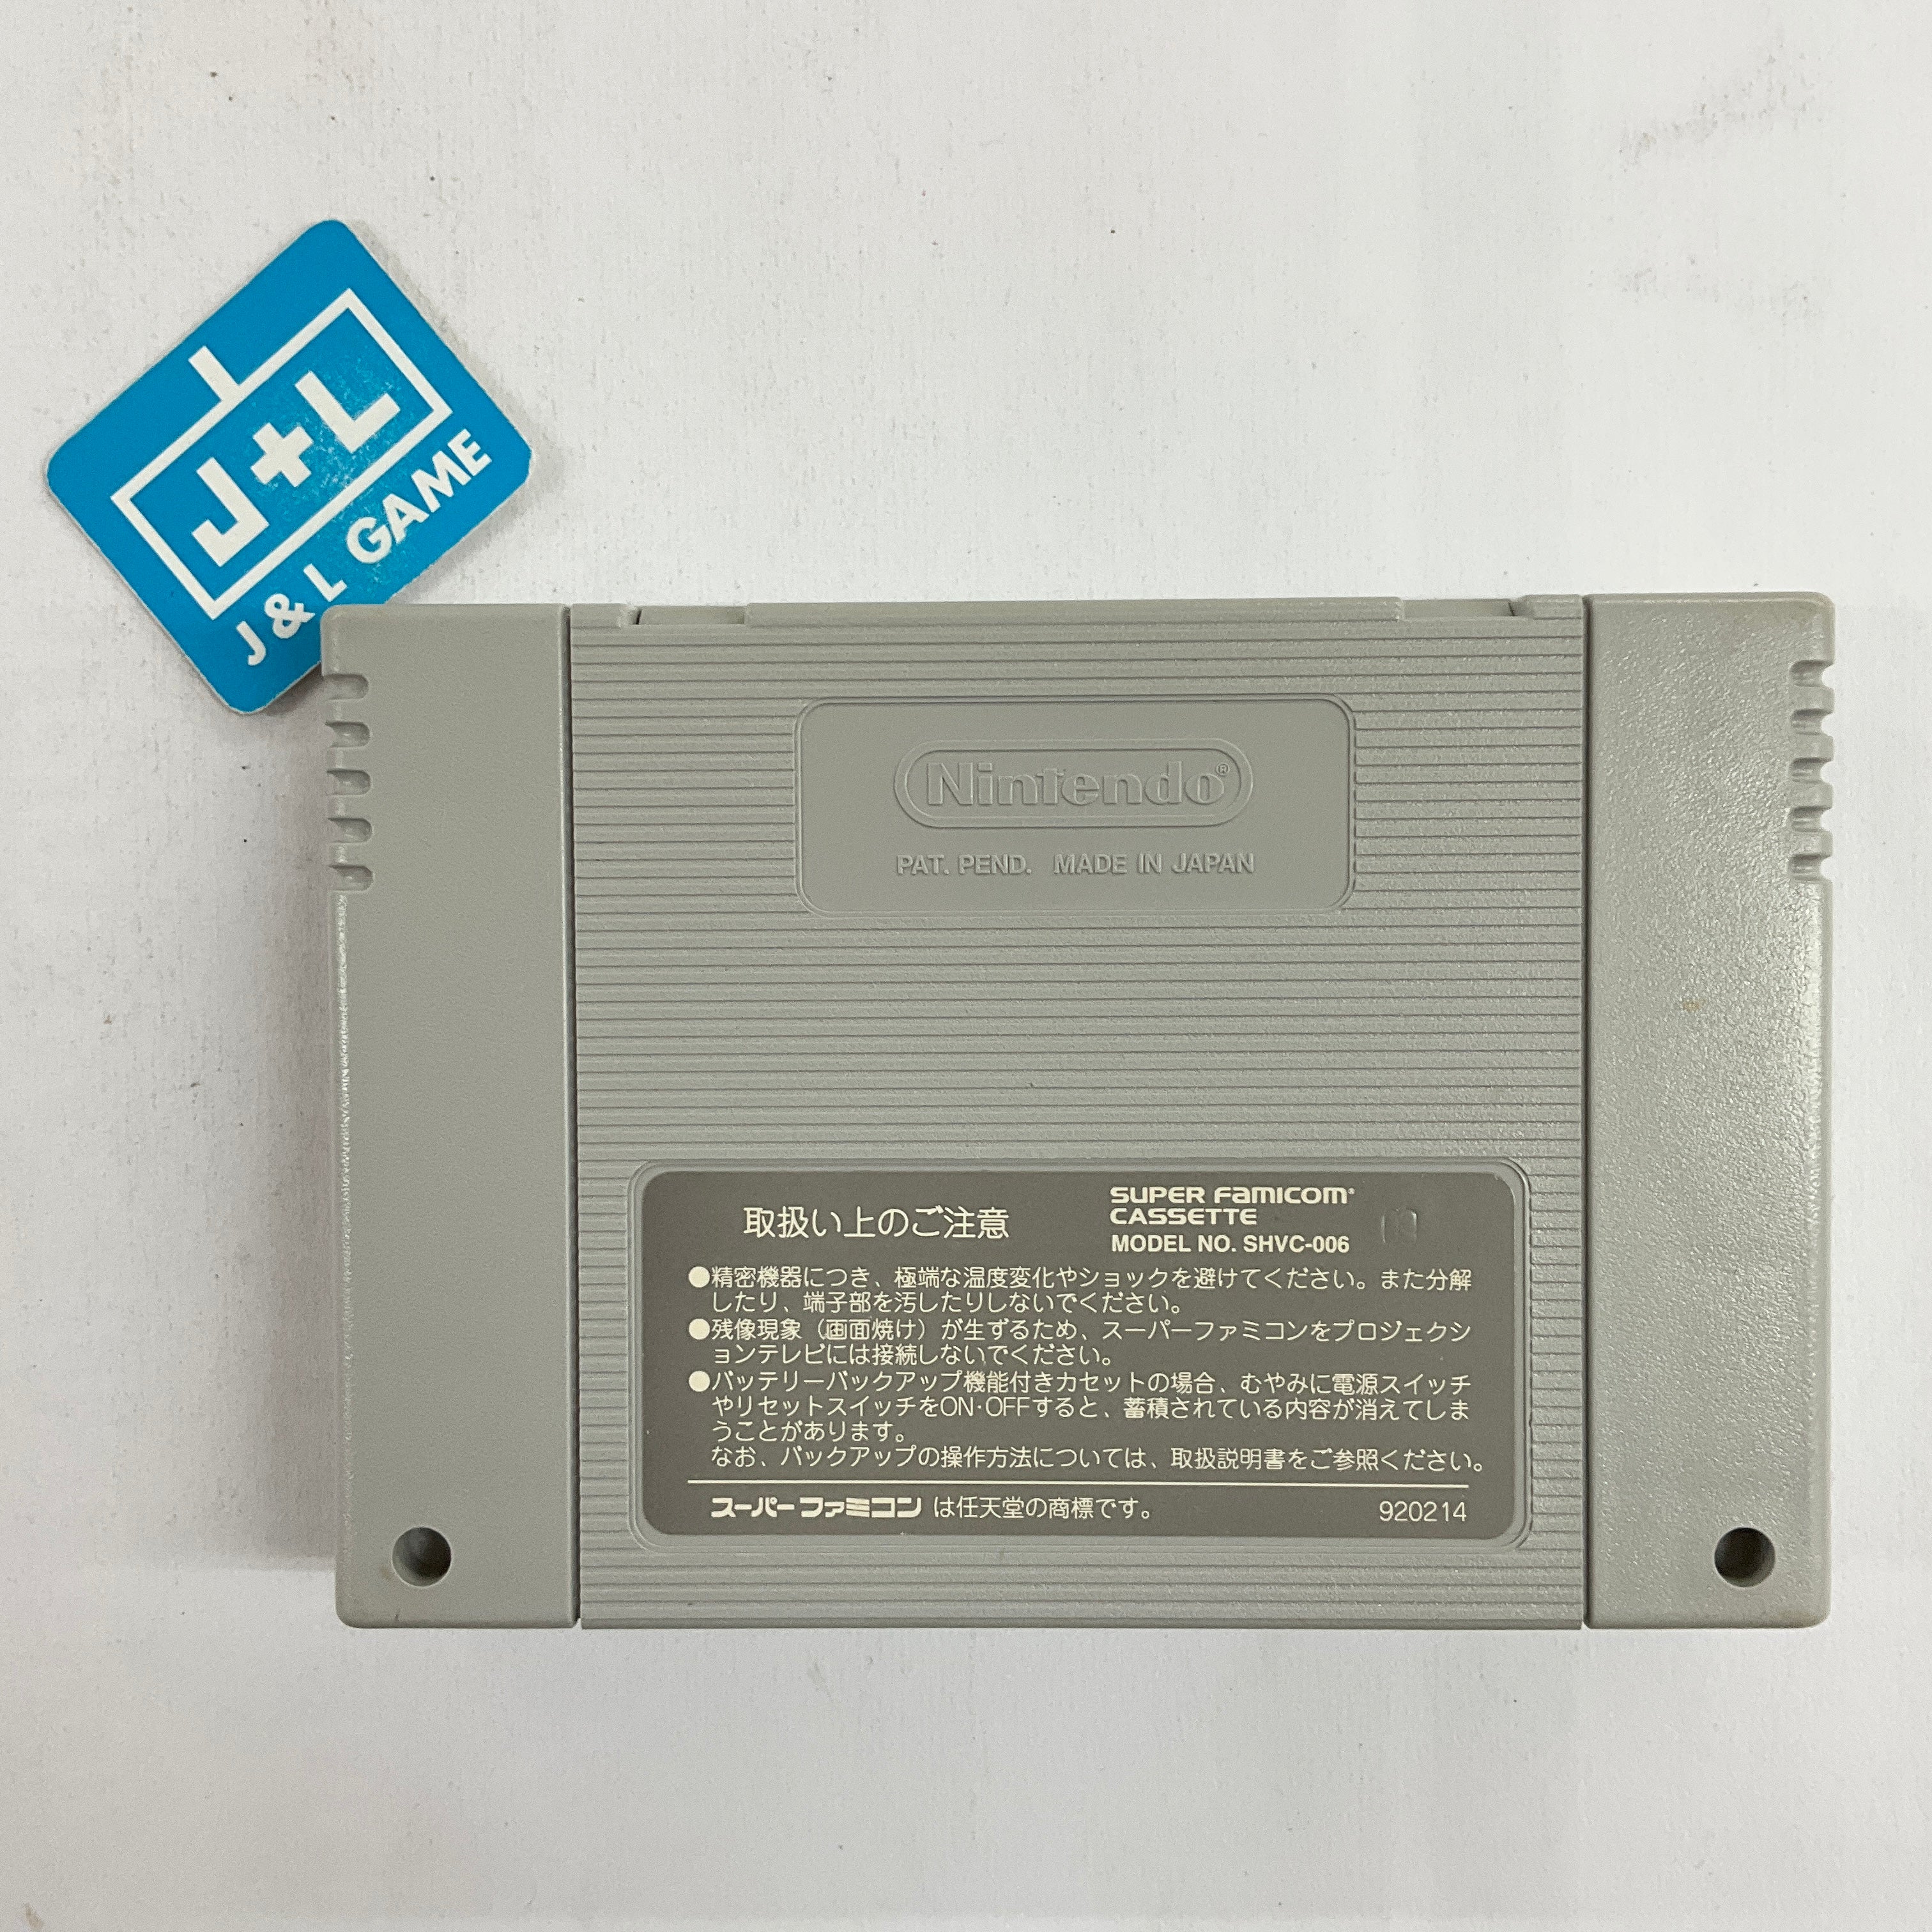 Mother 2: Gyiyg no Gyakushuu - Super Famicom (Japanese Import) [Pre-Owned] Video Games Nintendo   